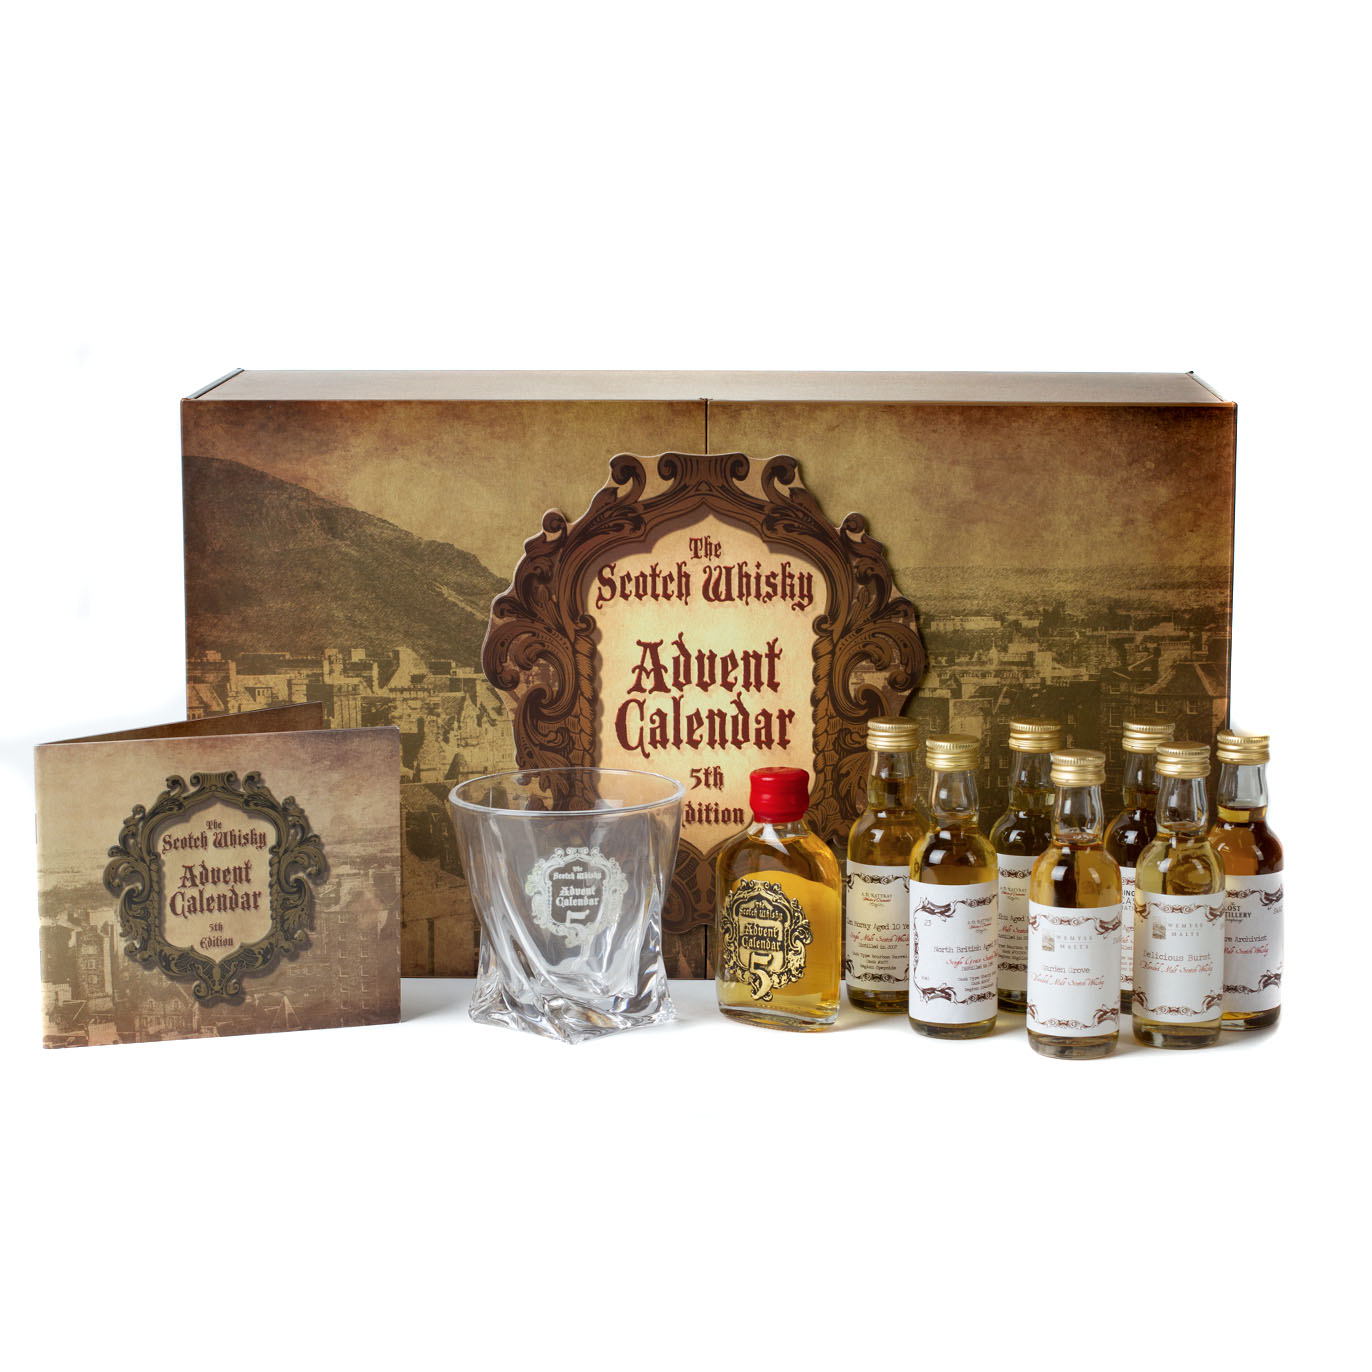 Premium Whisky Advent Calendar from Secret Spirits with whisky bottles